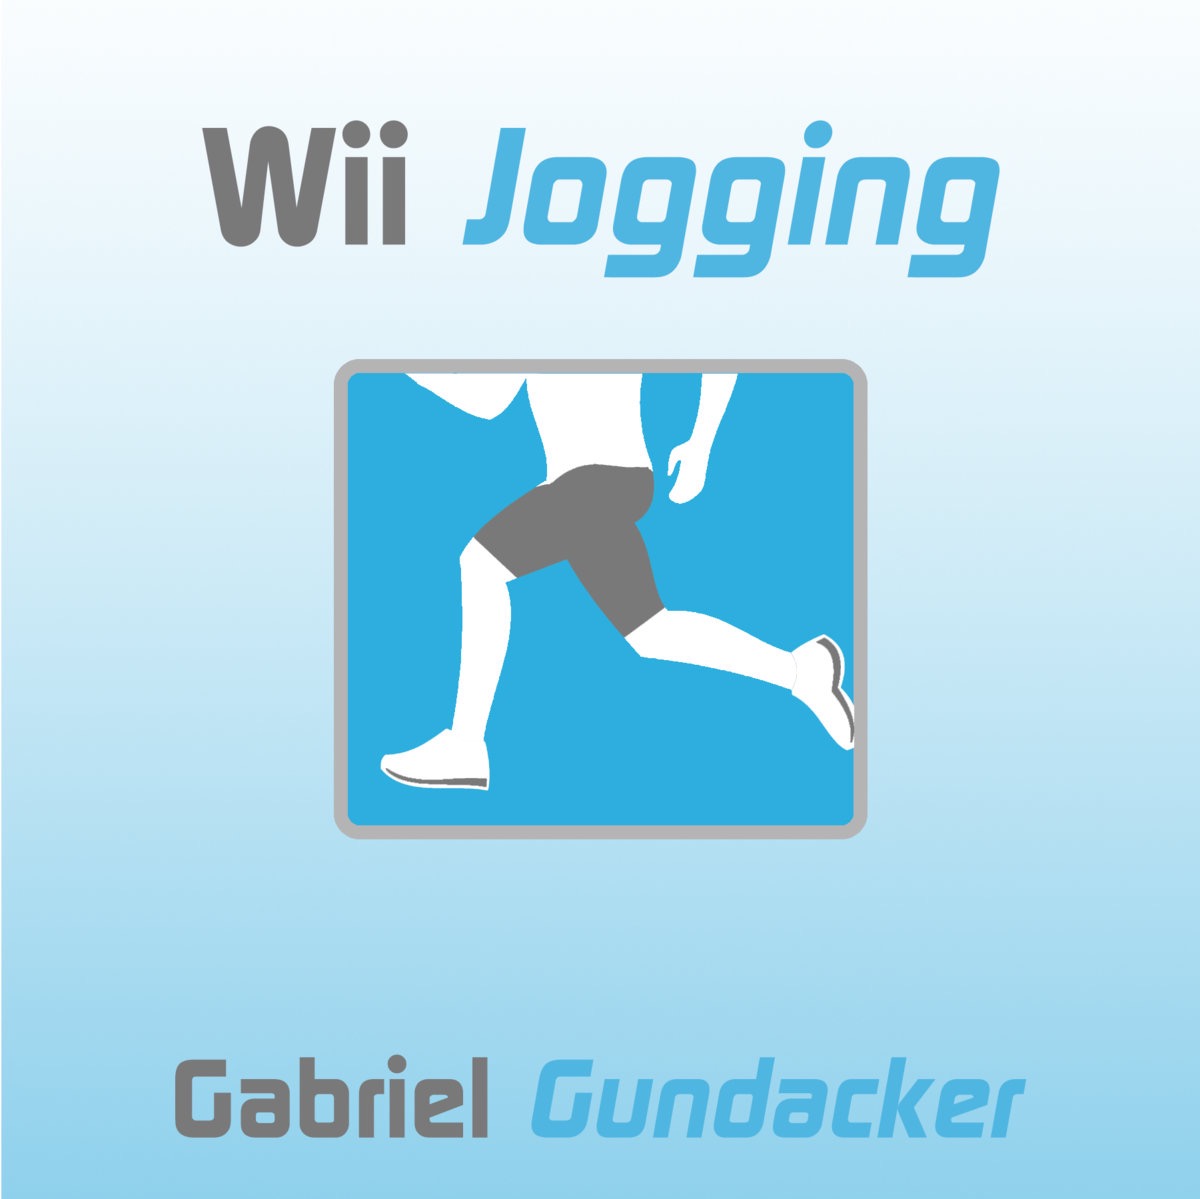 Album Art for "Wii Jogging" by Gabriel Gundacker